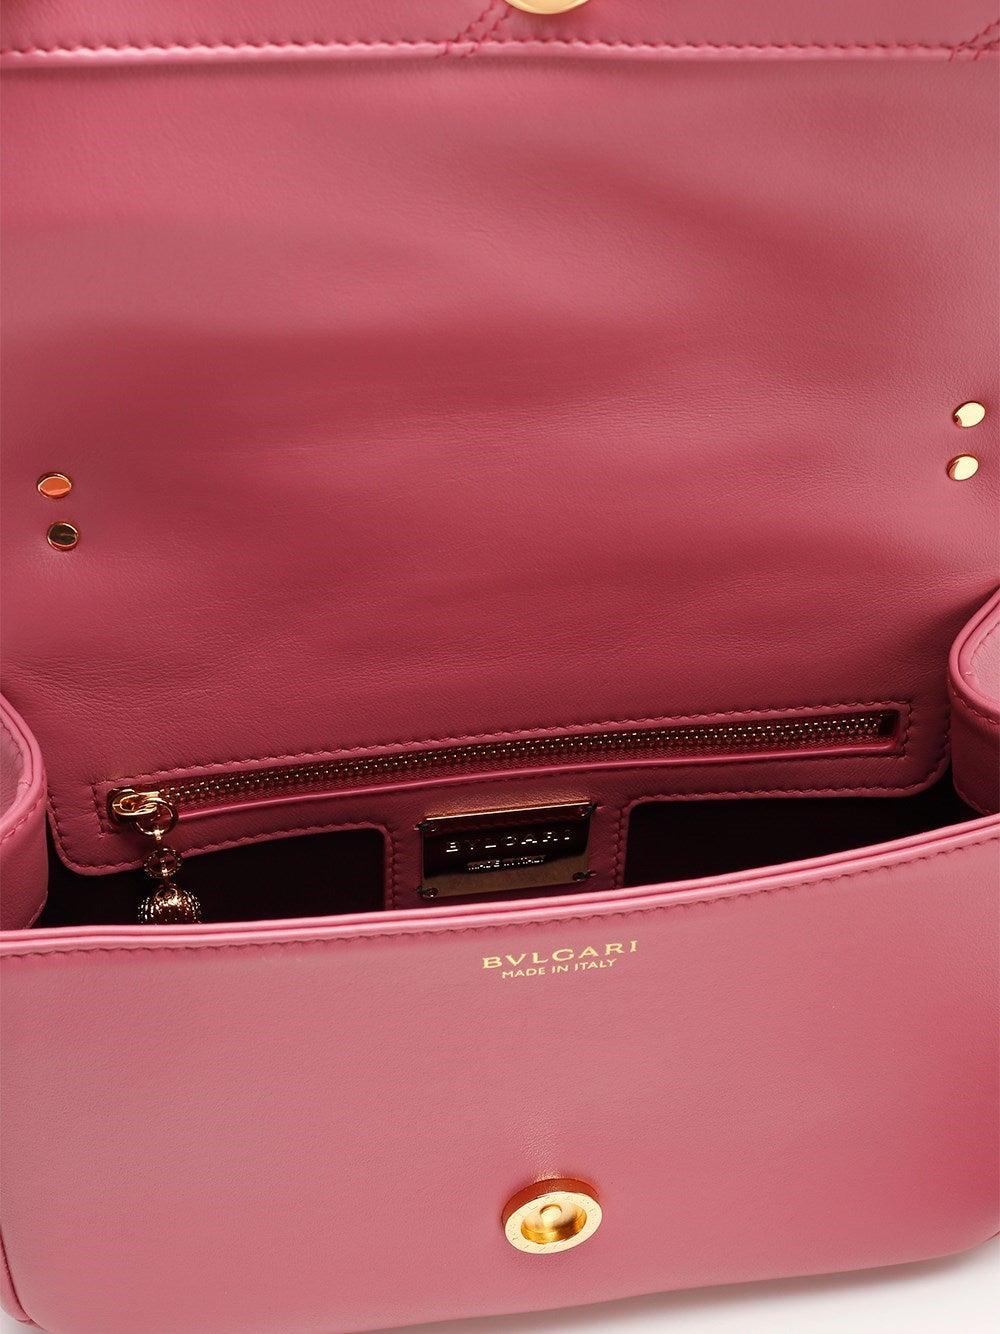 BVLGARI Serpenti Cabochon Small Crossbody Bag in Pink